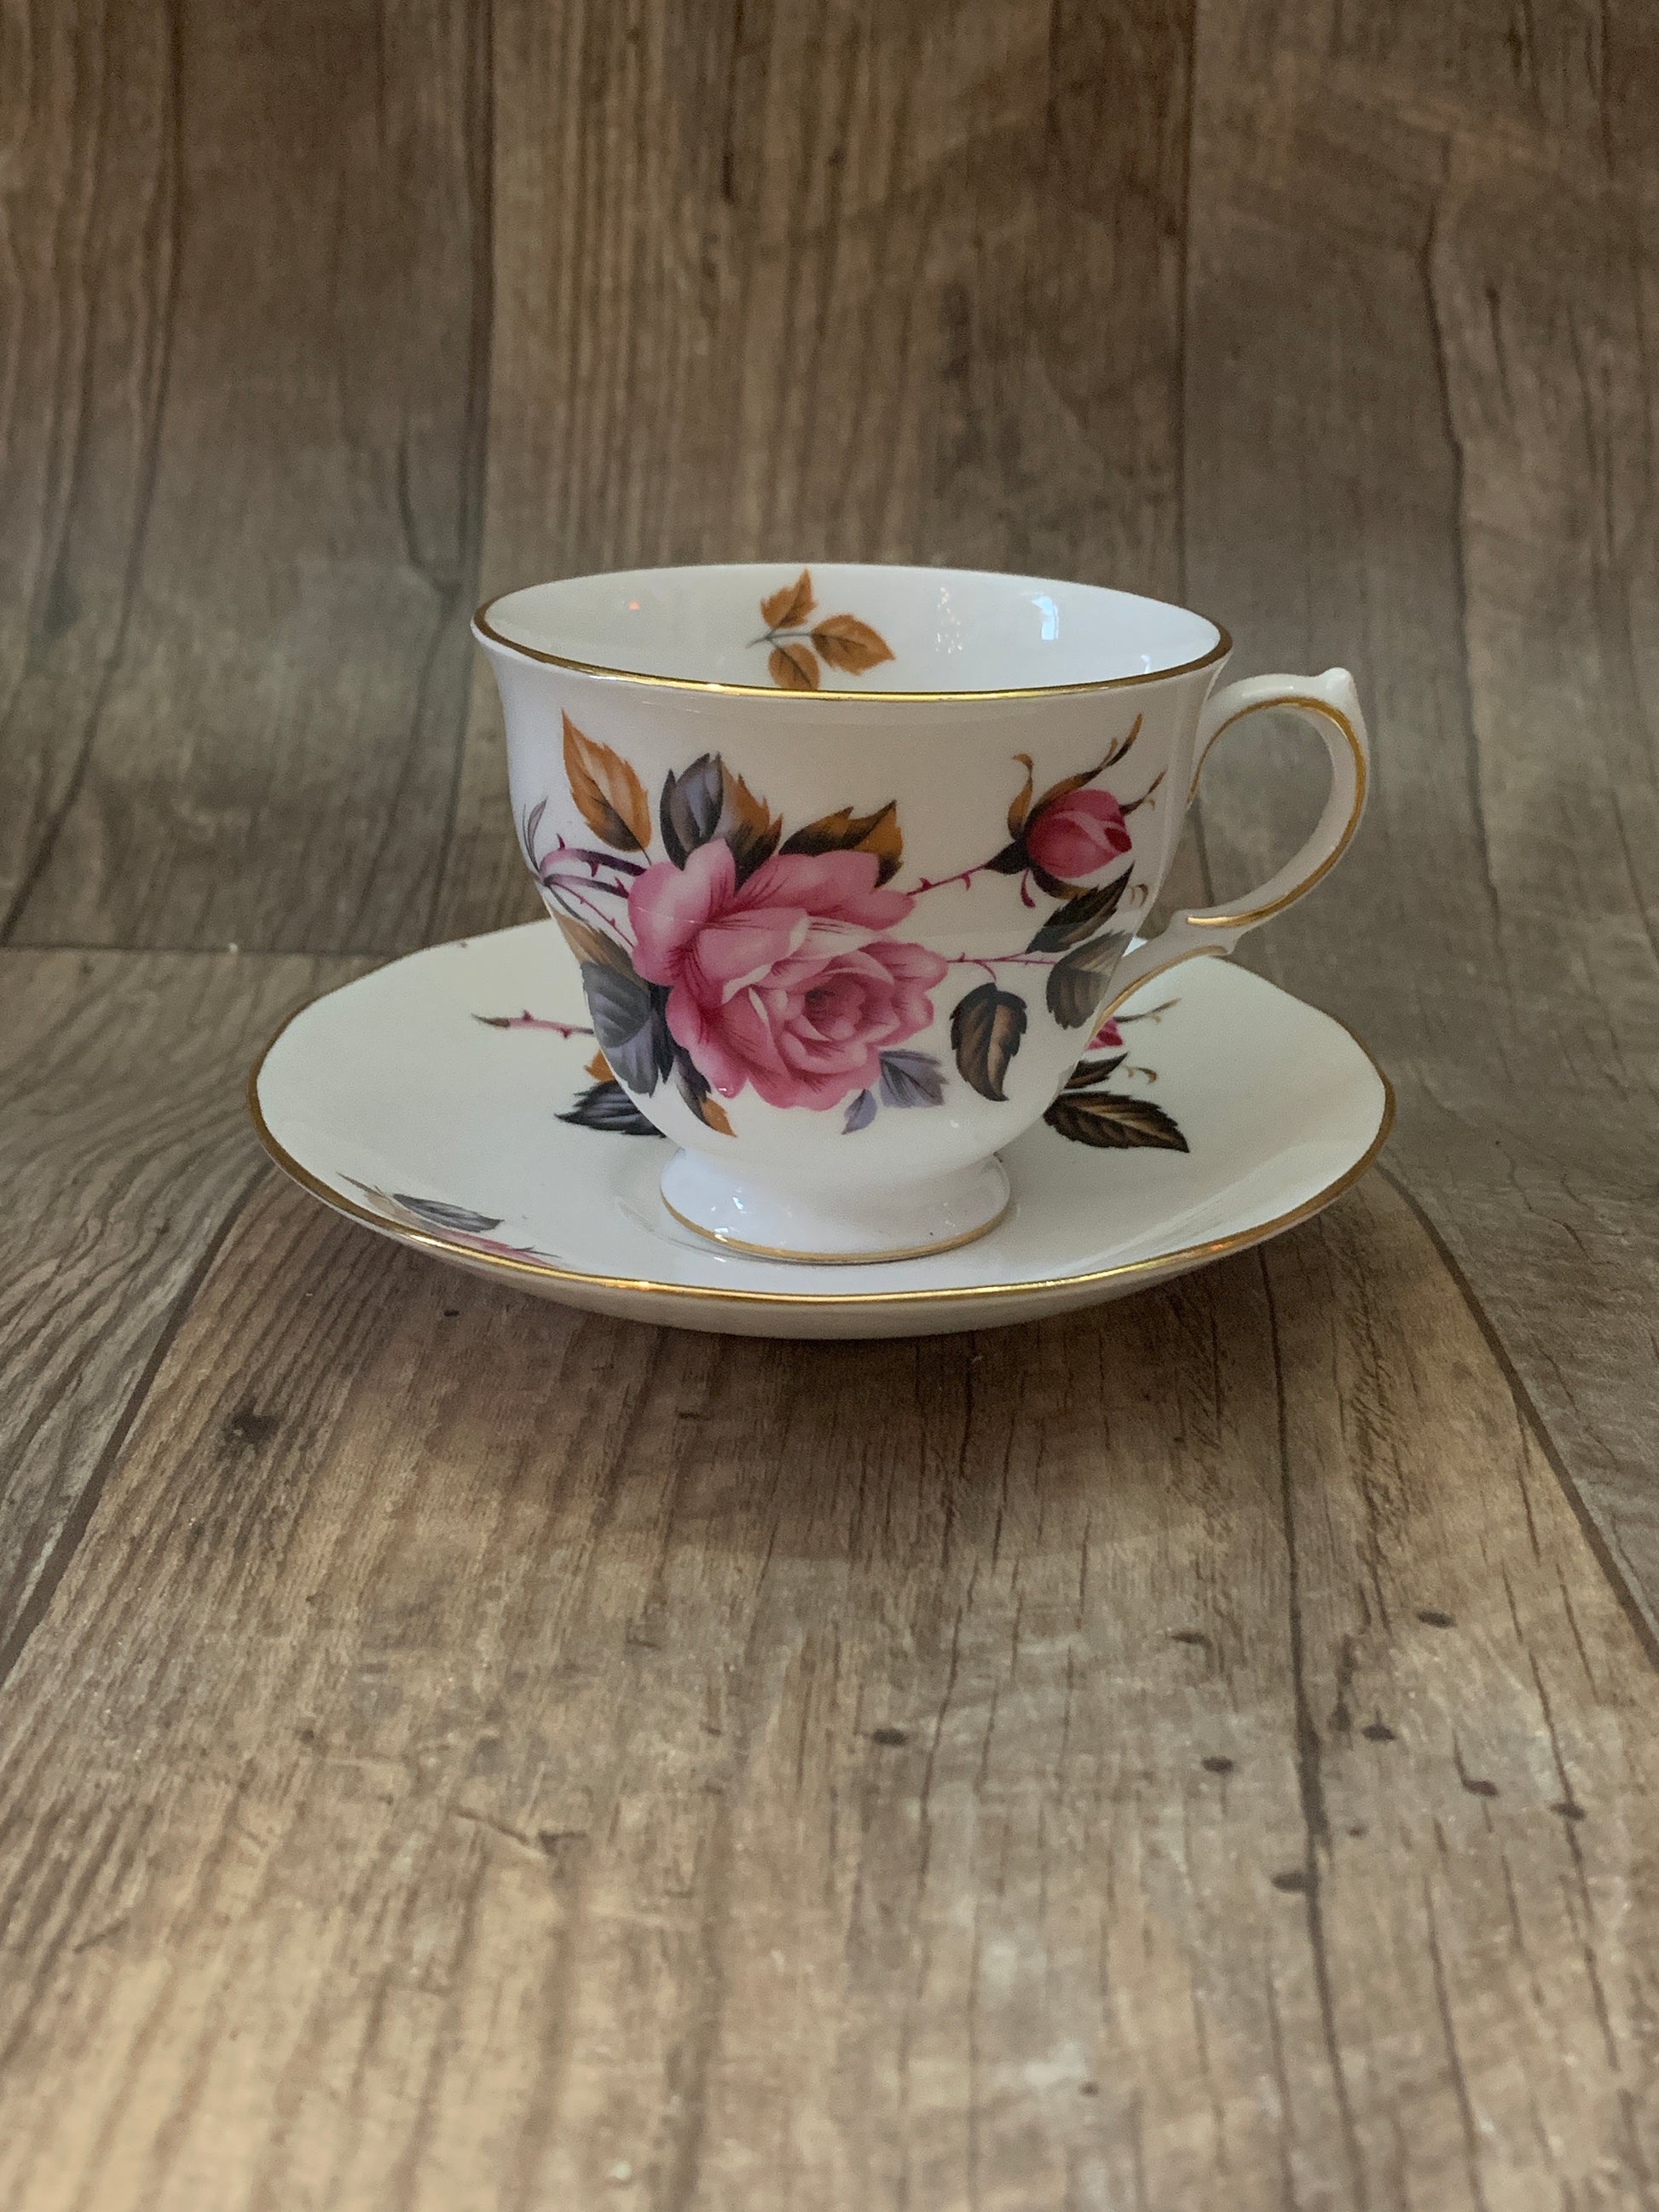 Pink floral teacup and saucer